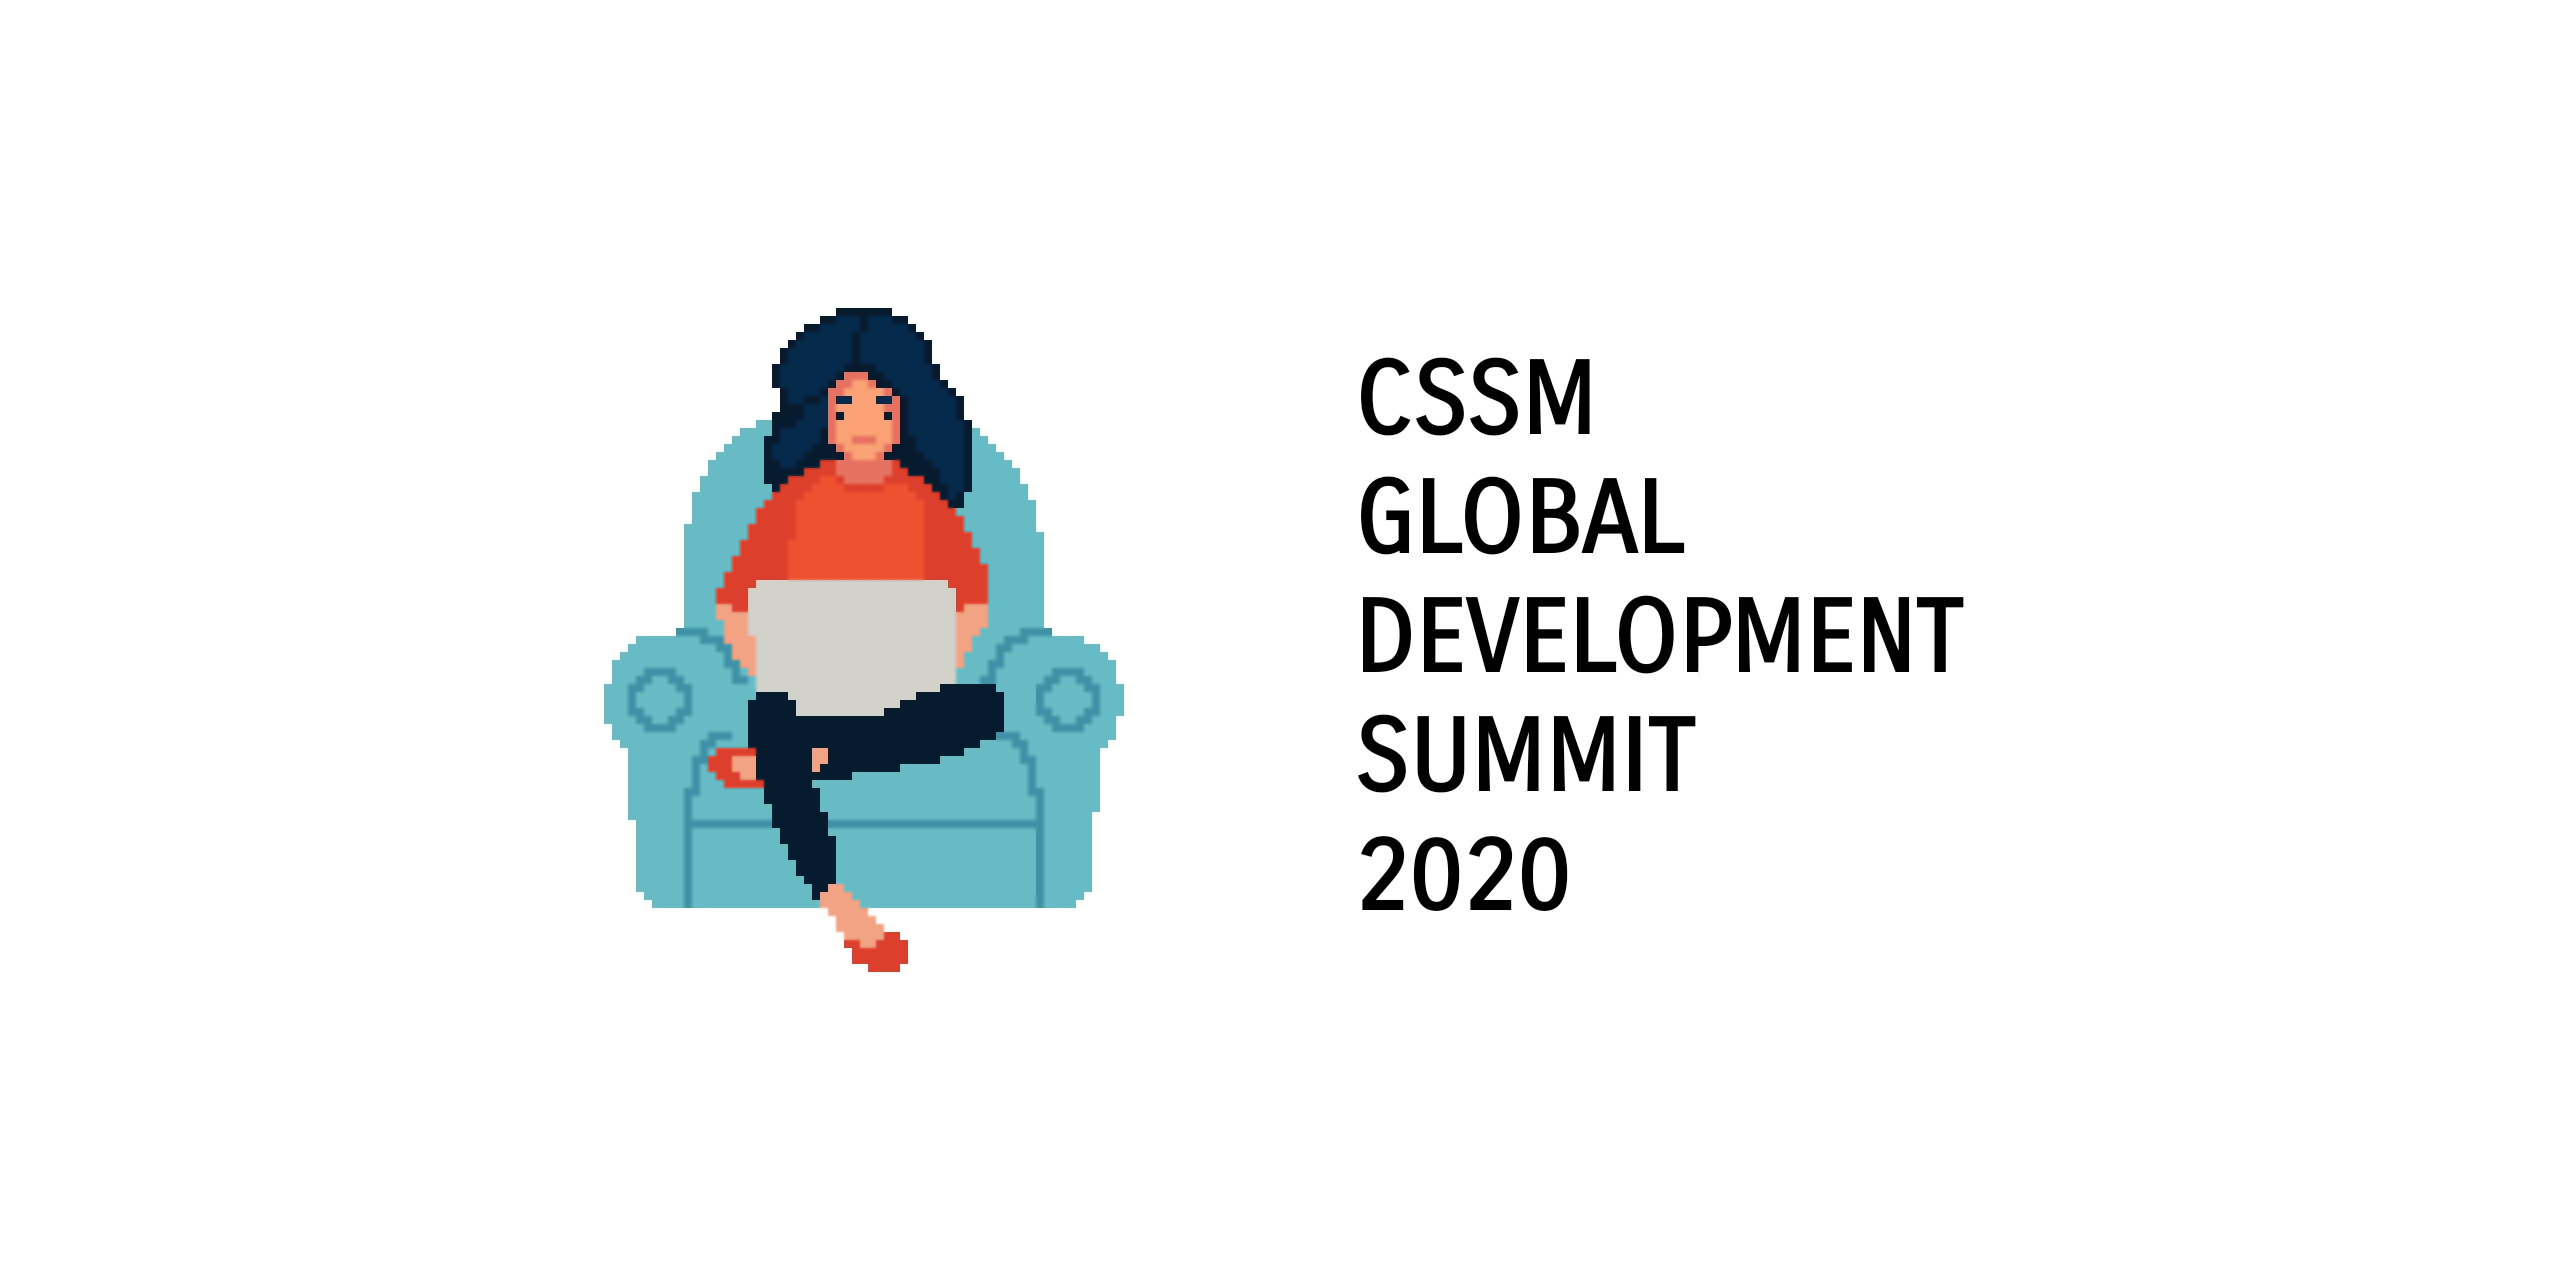 CSSM Global Development Summit 2020